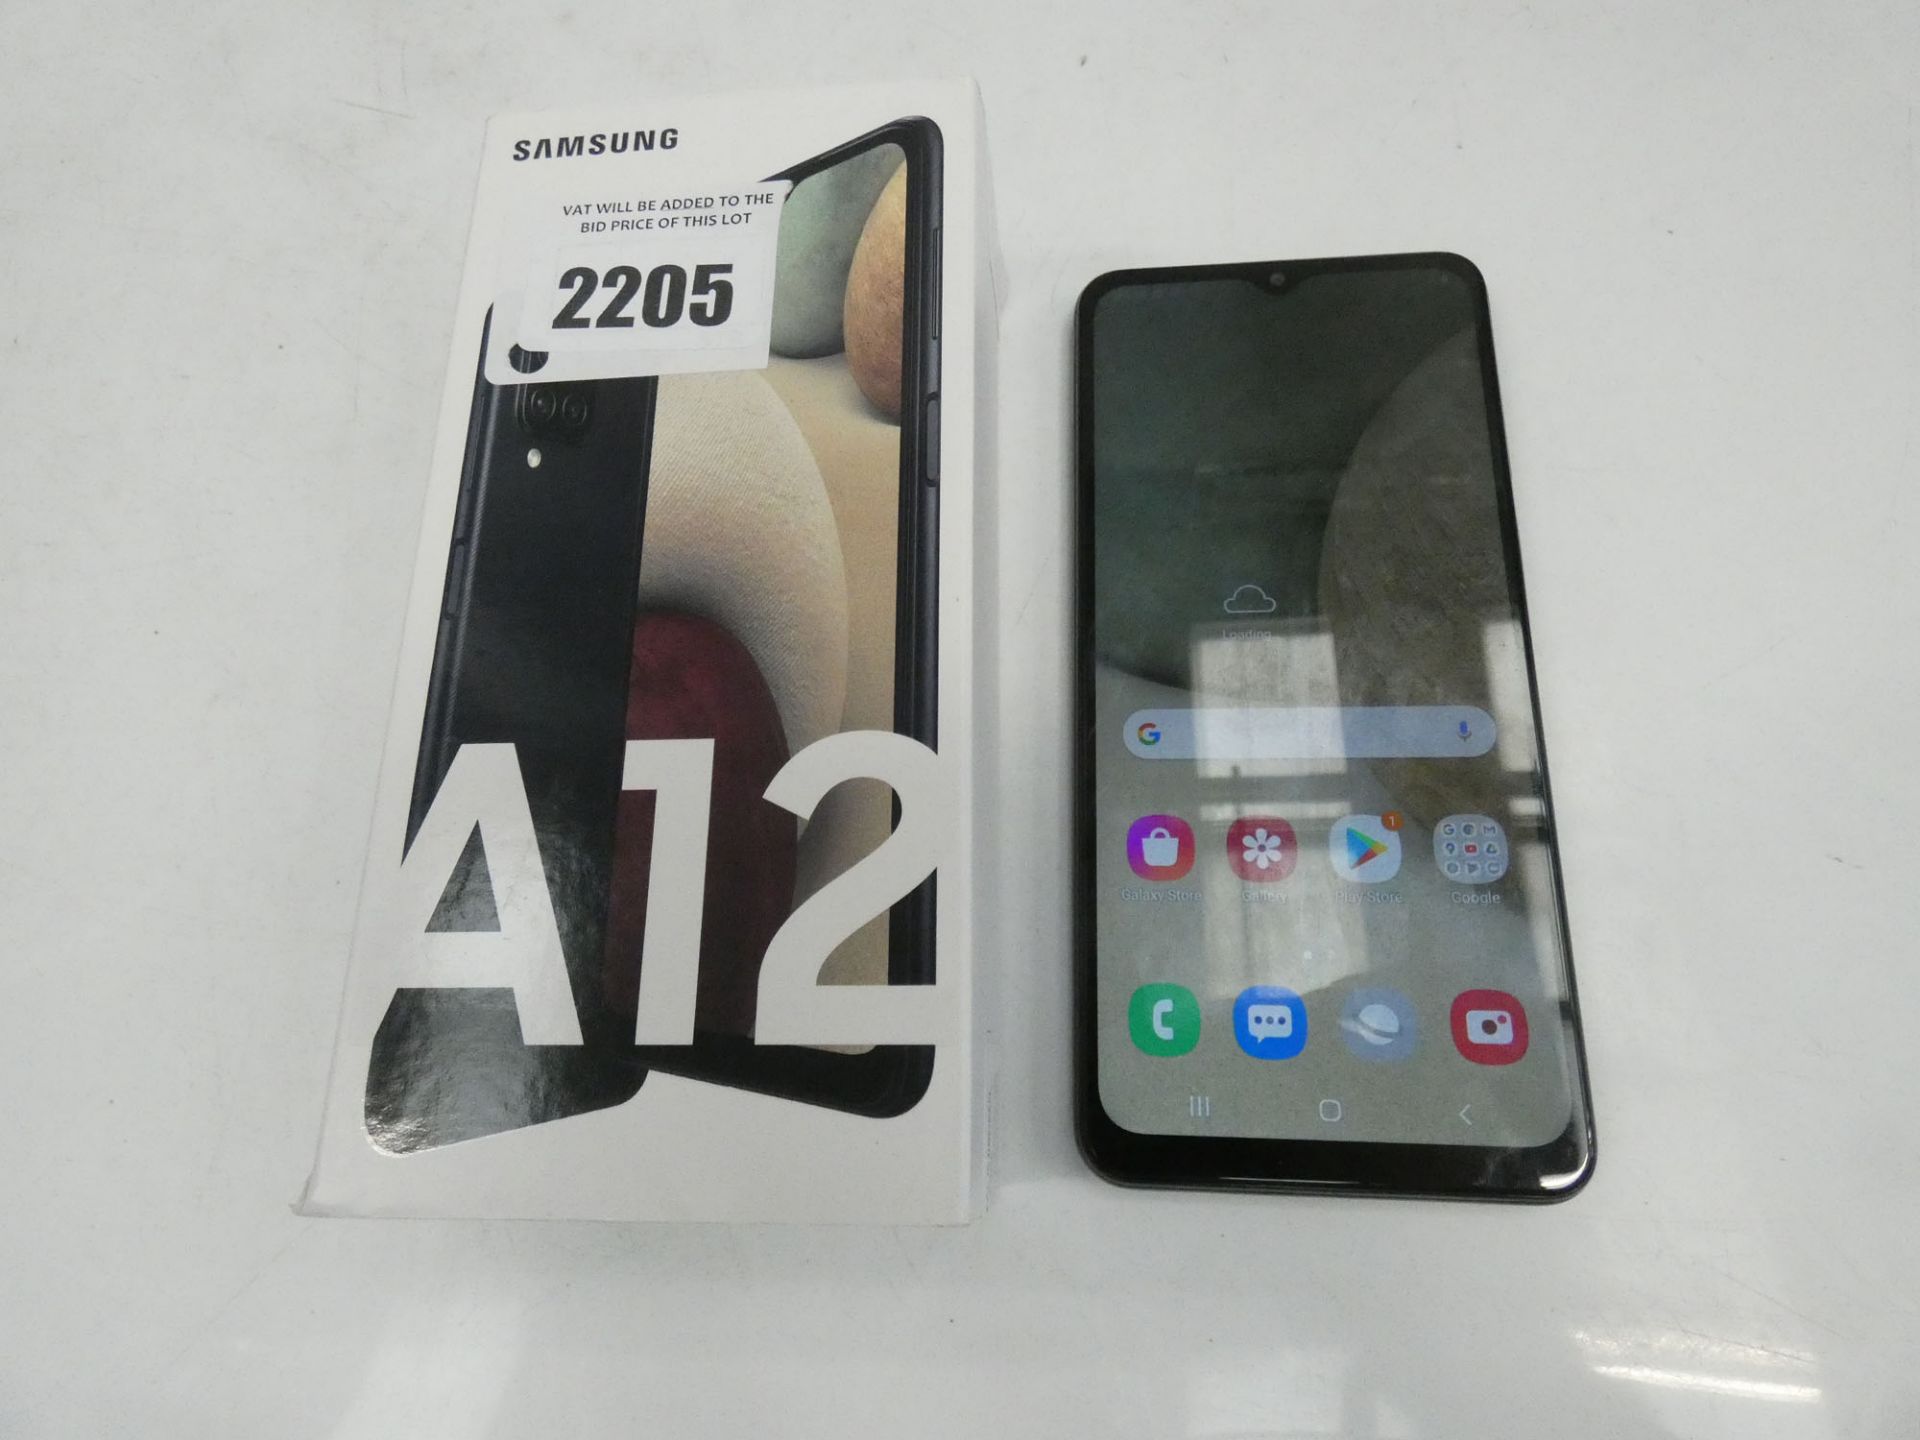 Samsung A12 64GB smartphone with box